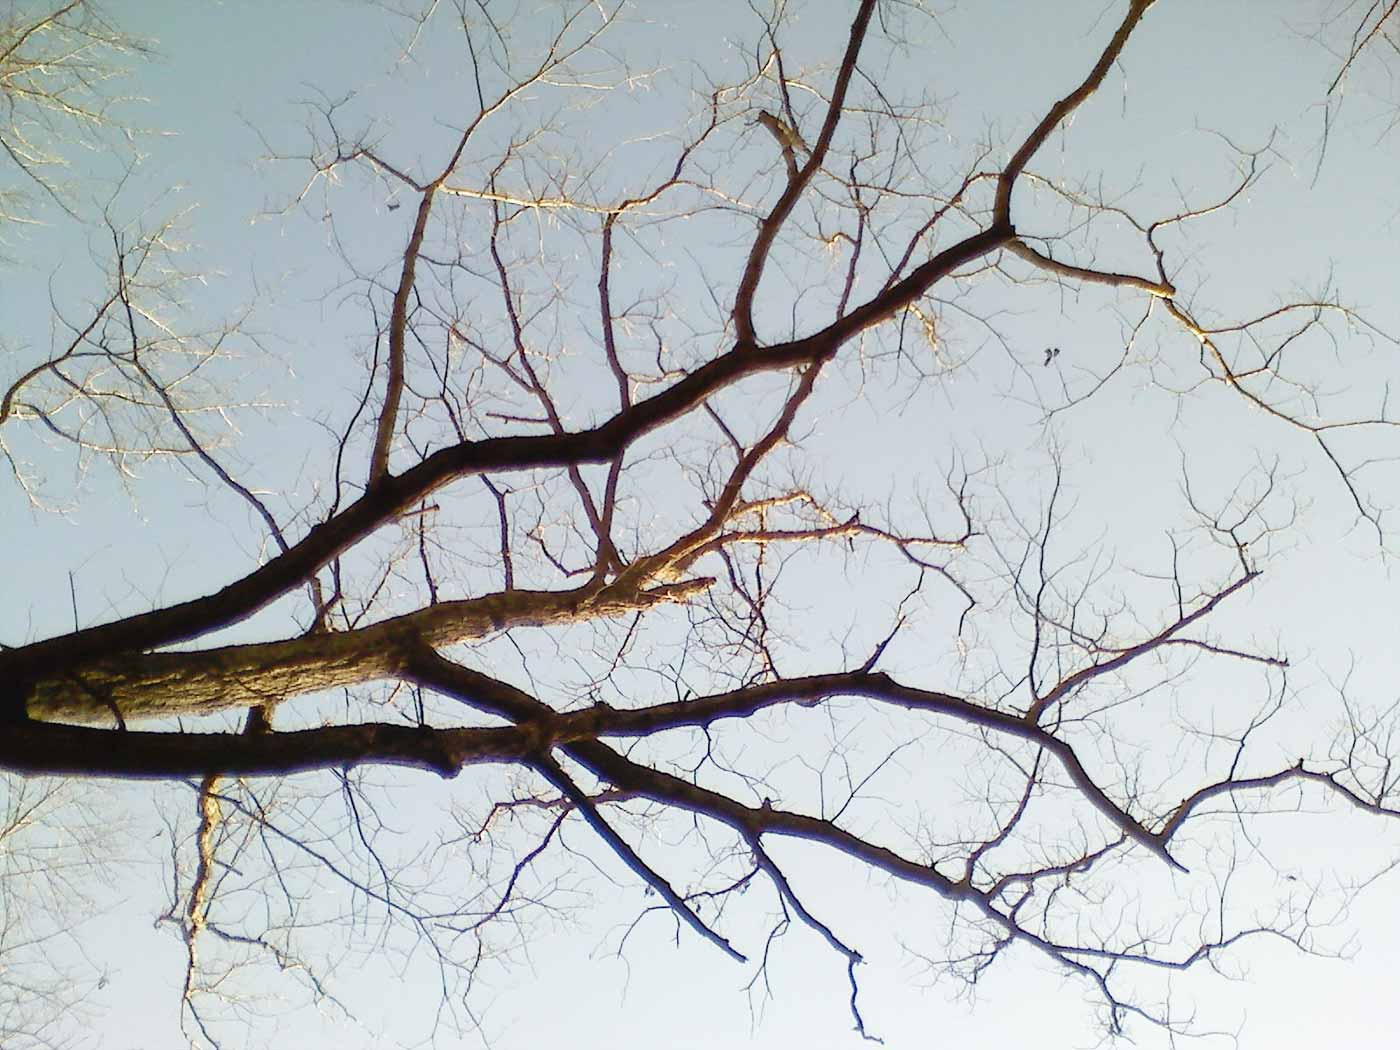 Neuron branches